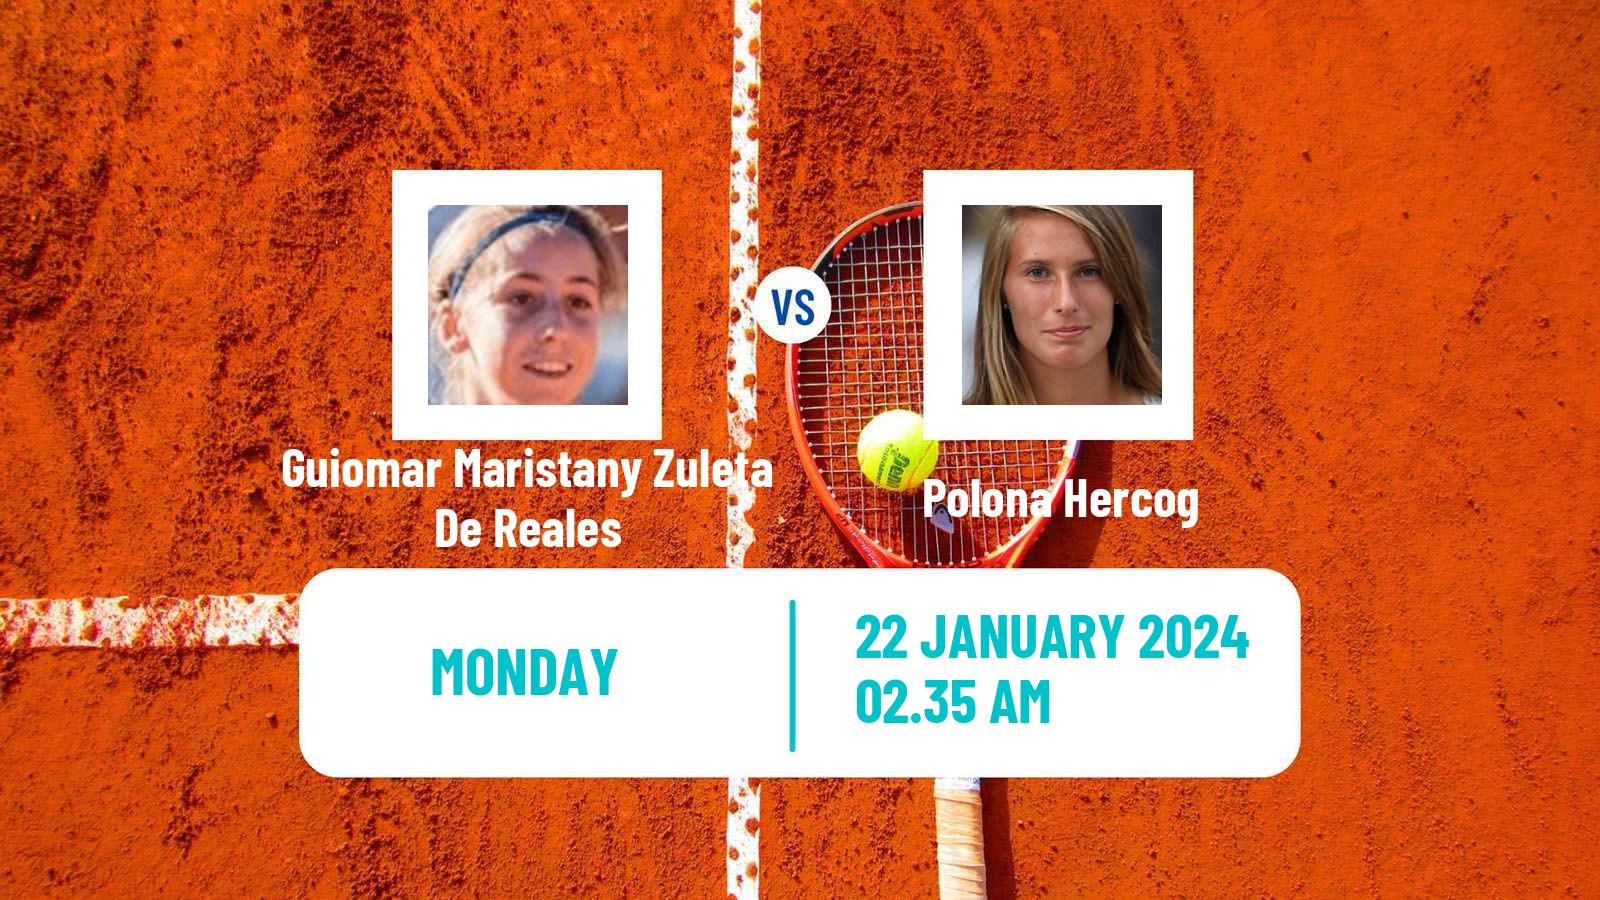 Tennis ITF W50 Antalya Women Guiomar Maristany Zuleta De Reales - Polona Hercog